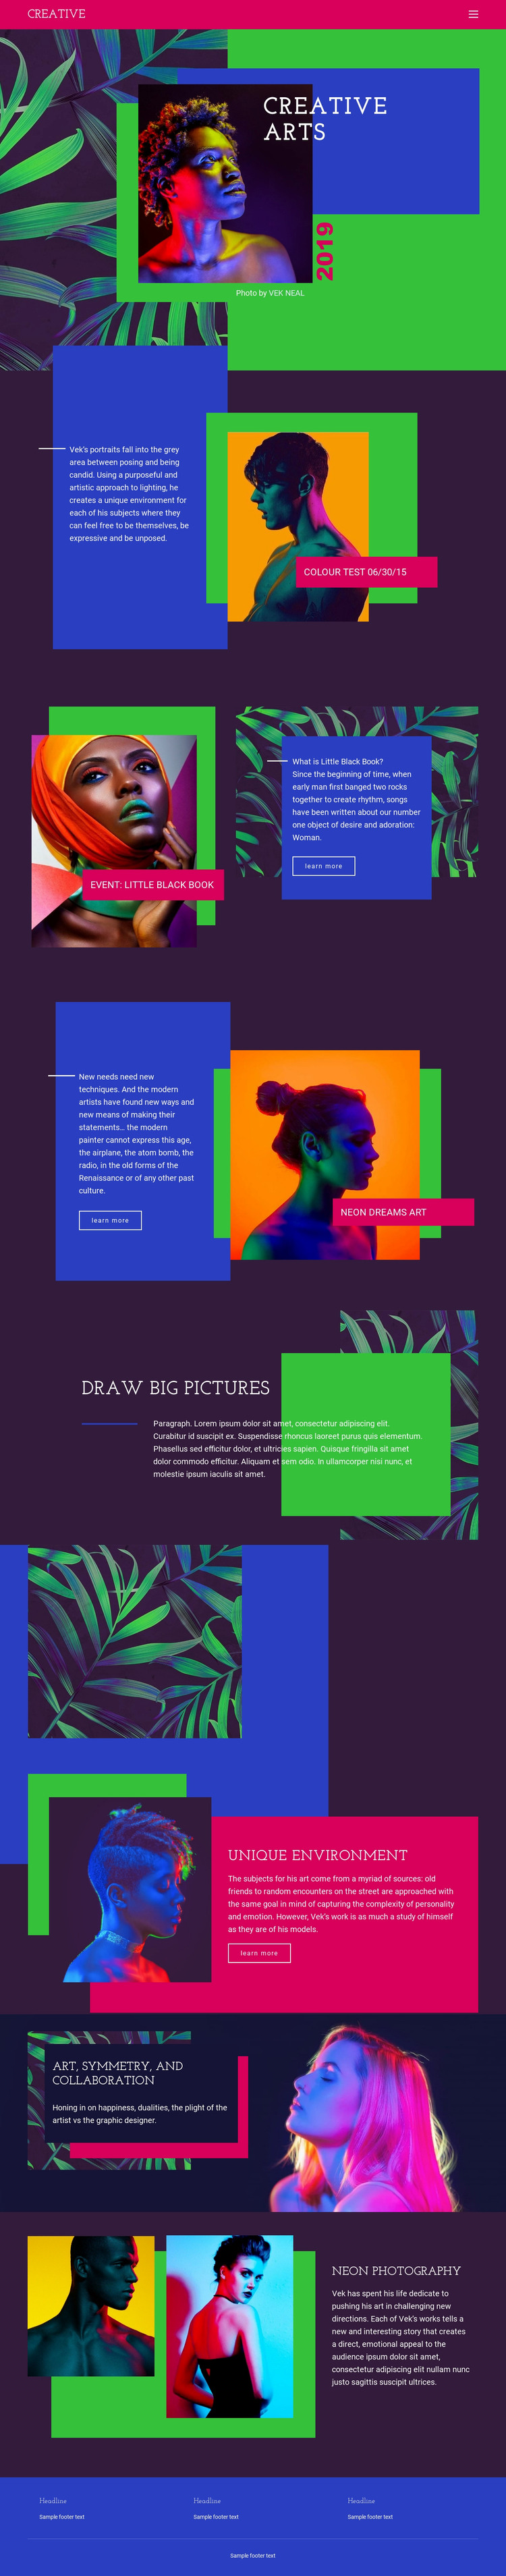 Creative Art Ideas WordPress Theme